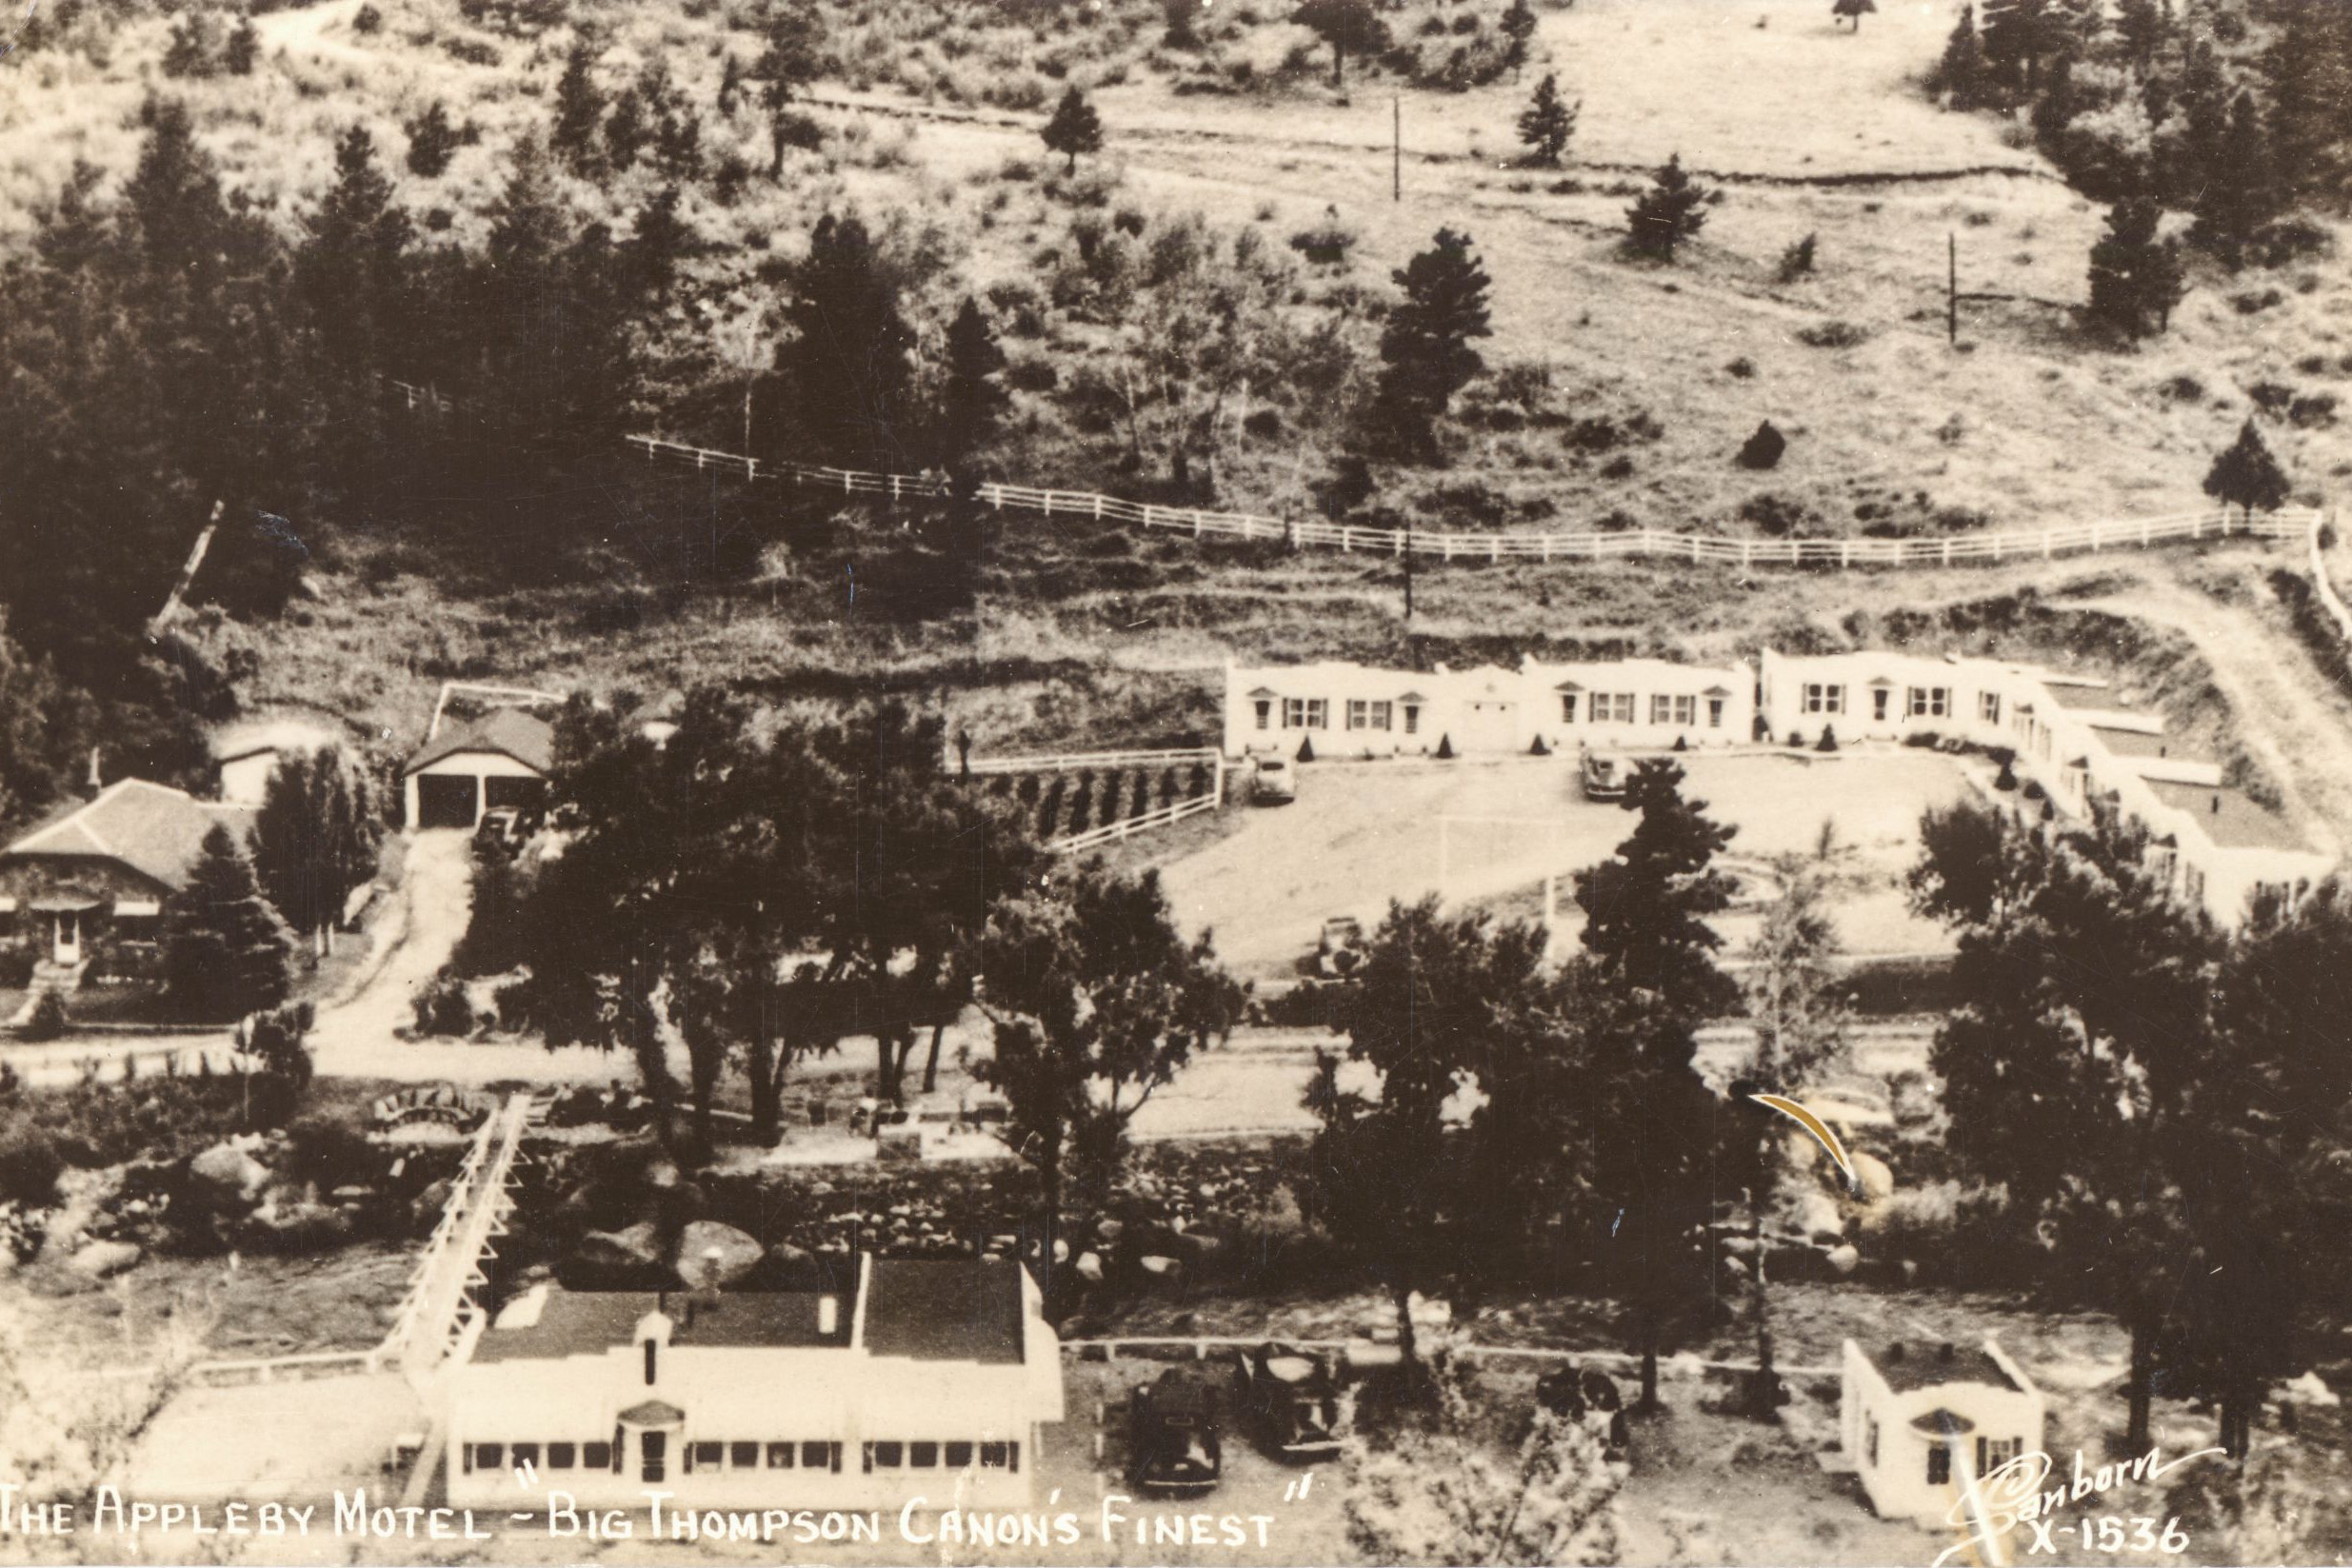 Idlewild Lodge - idlewildlodge.github.io - Circa 1949 - Postcard of the Appleby Motel Complex